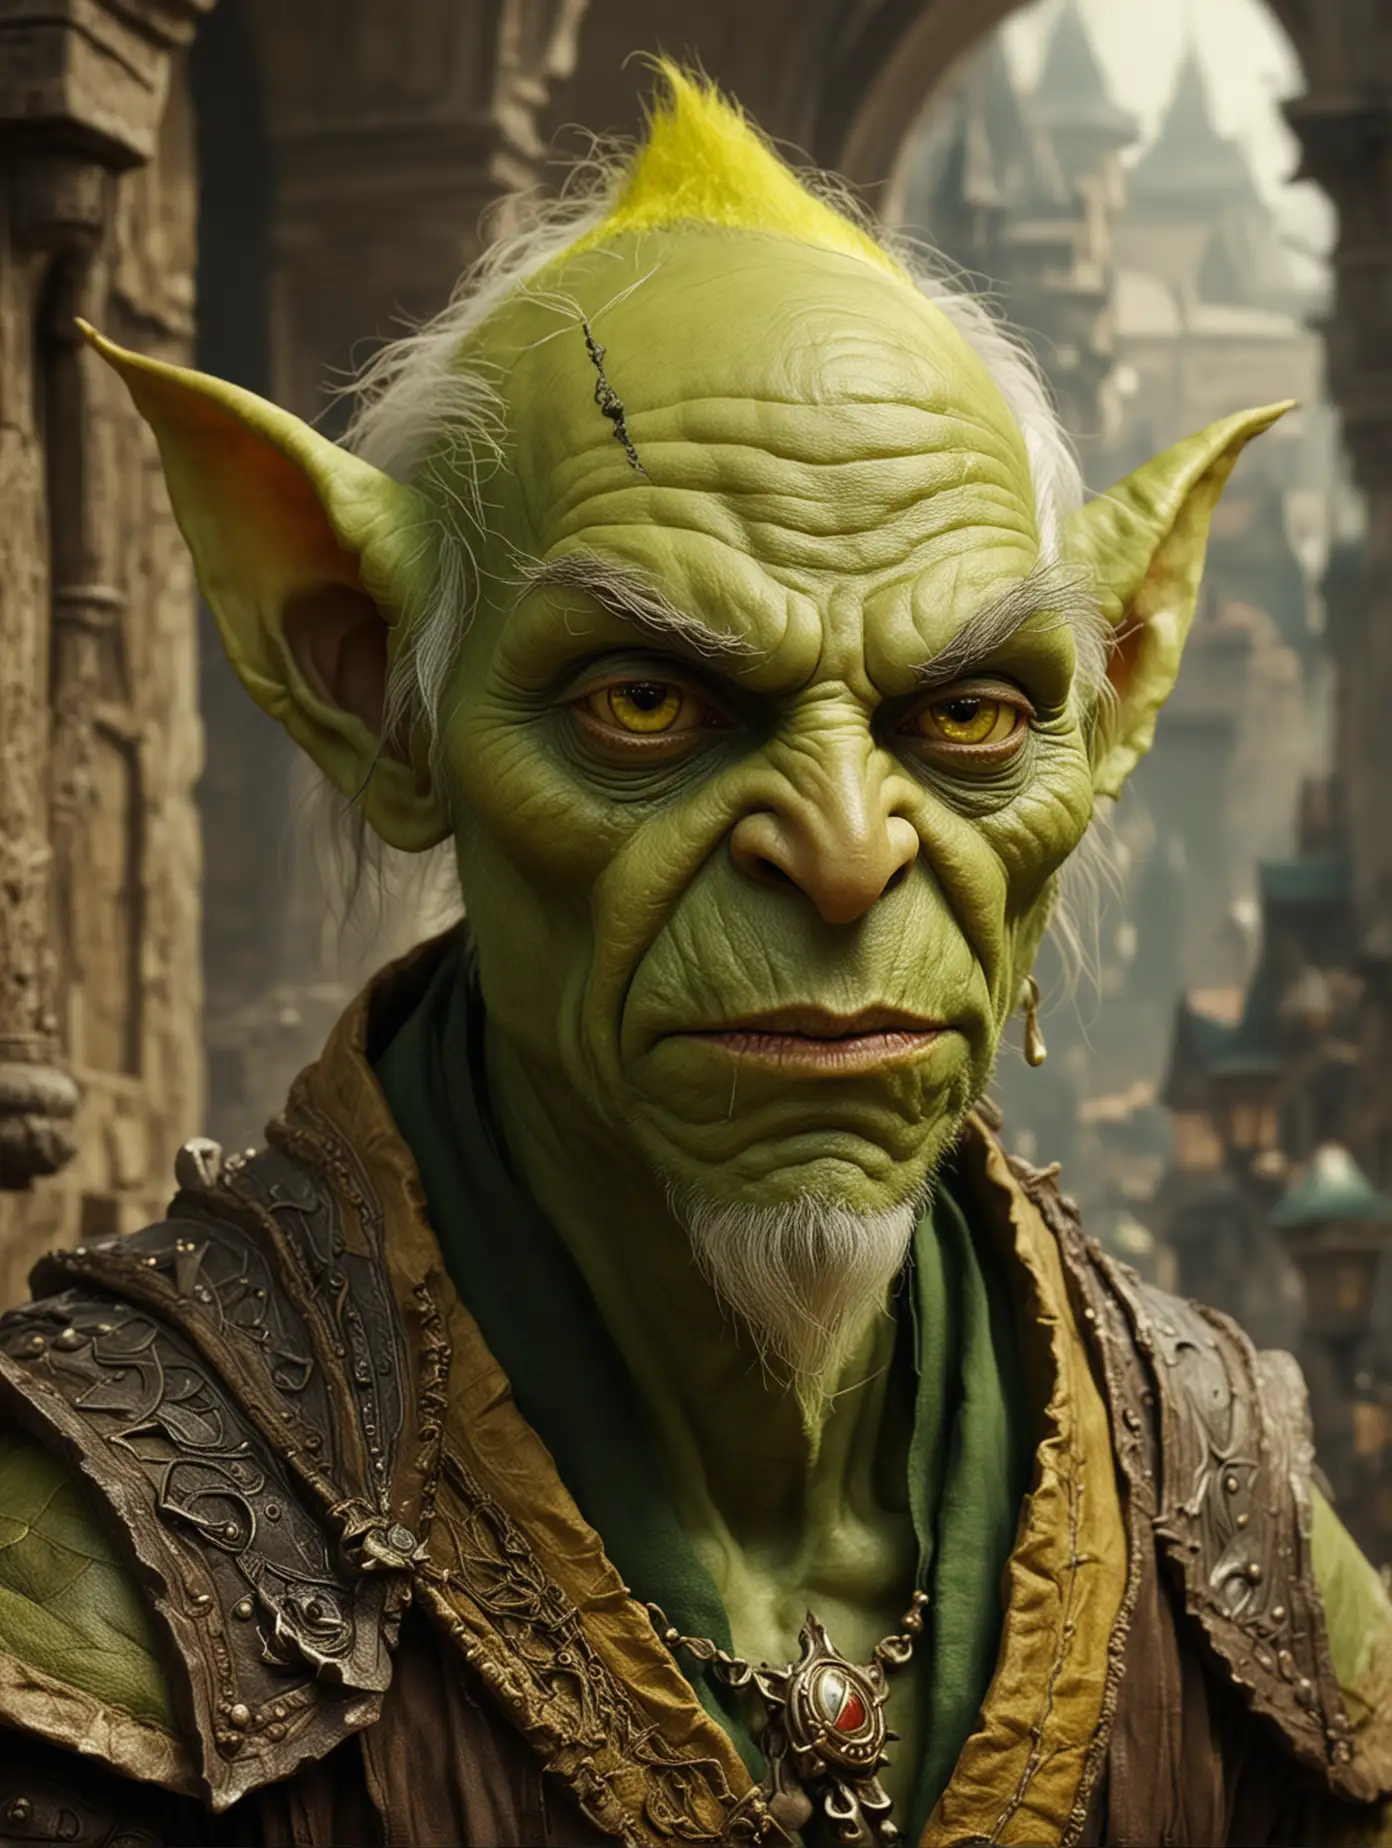 Yellow/green skinned goblin, stately garb in a haigh fantasy setting. Resembles Benjamin Netnayahu.